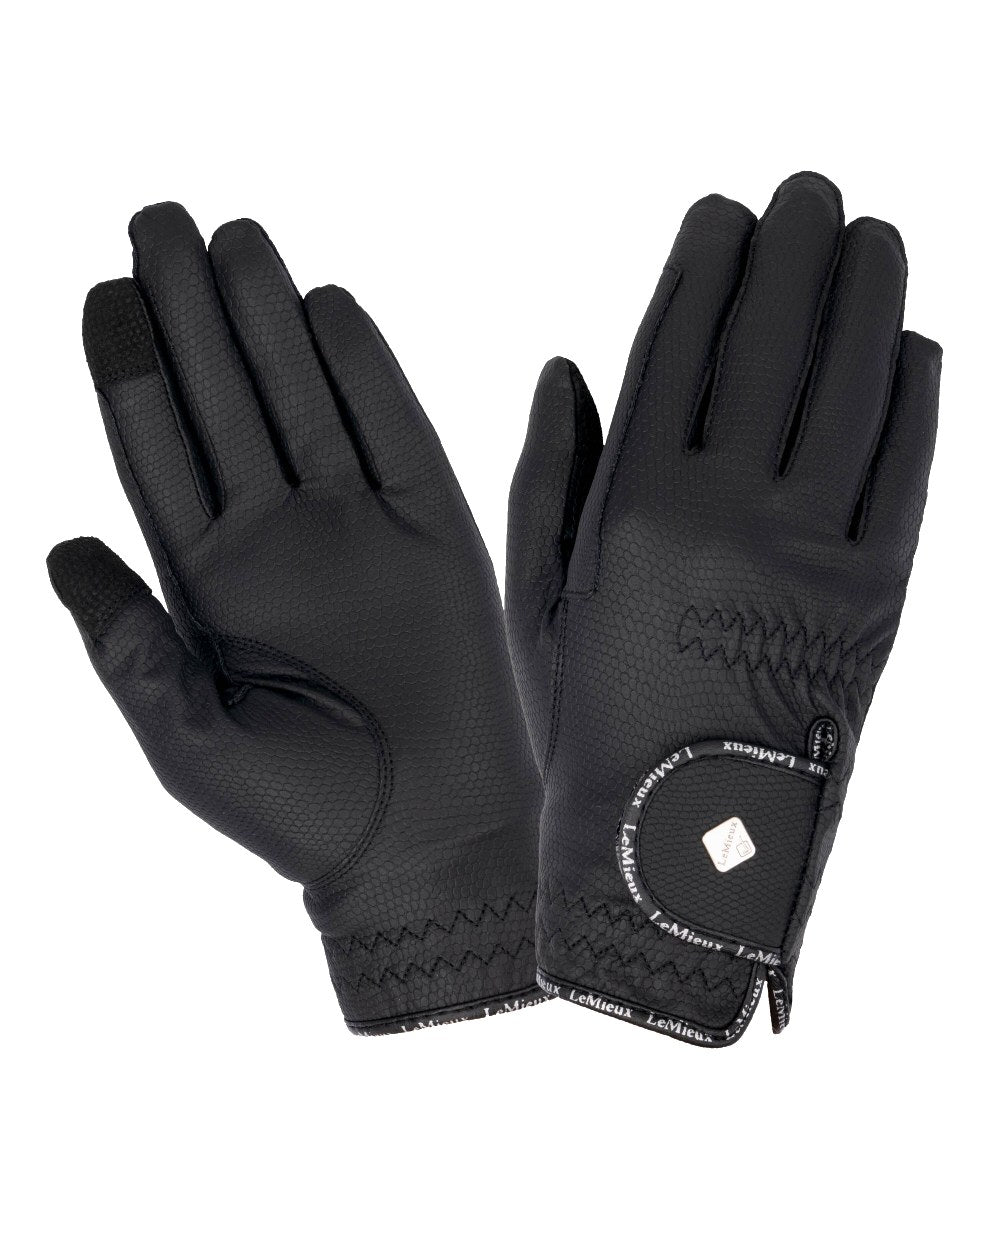 Black coloured LeMieux Classic Riding Gloves on white background 